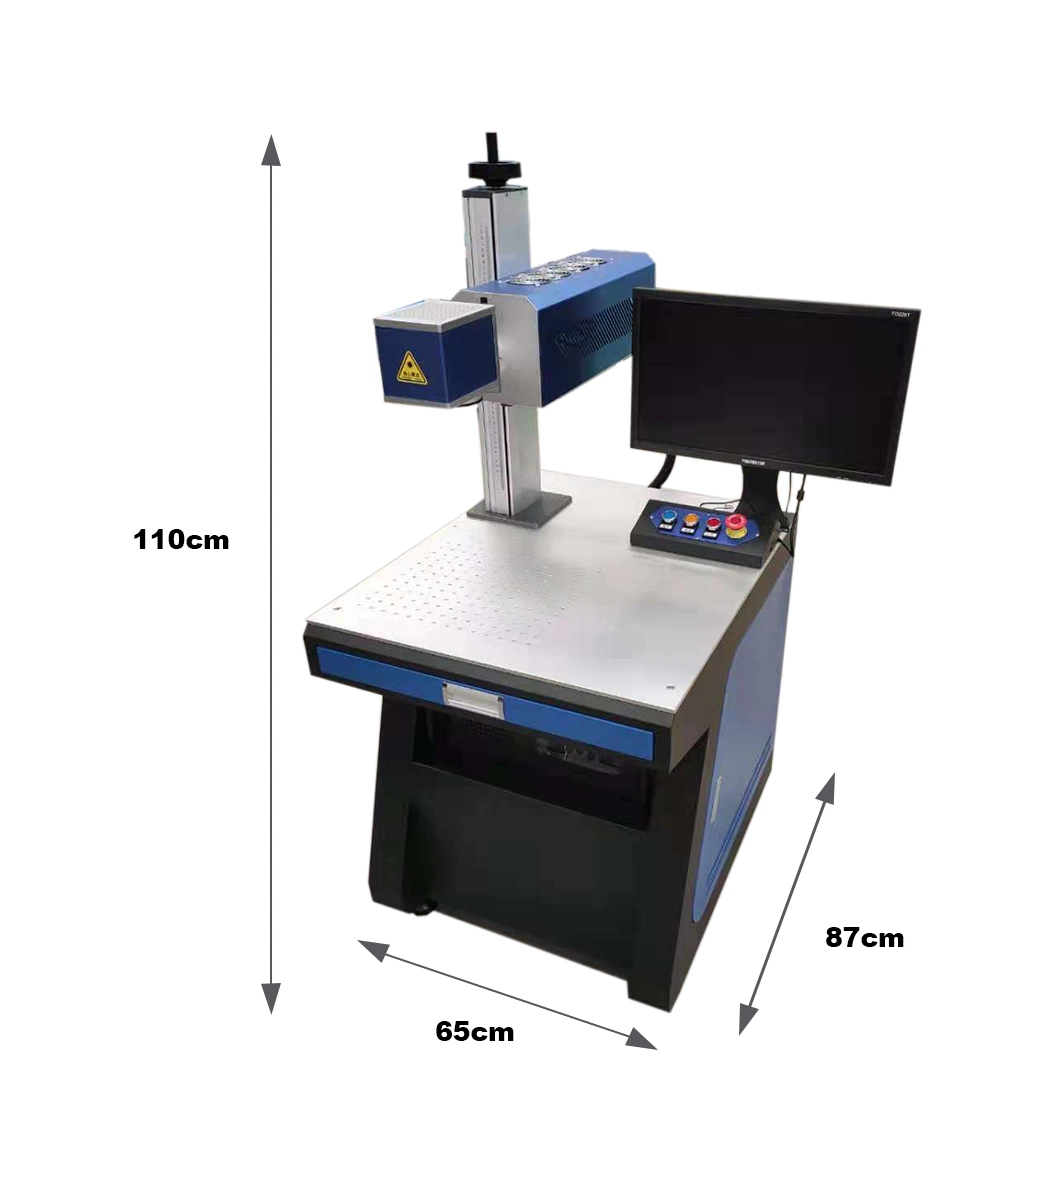 10.6um/10.2um/9.3um 30W Laser Power Chinese CO2 Metal RF Tube for Unmetal Material Laser Marking Machine CNC Machine Engraving Machine